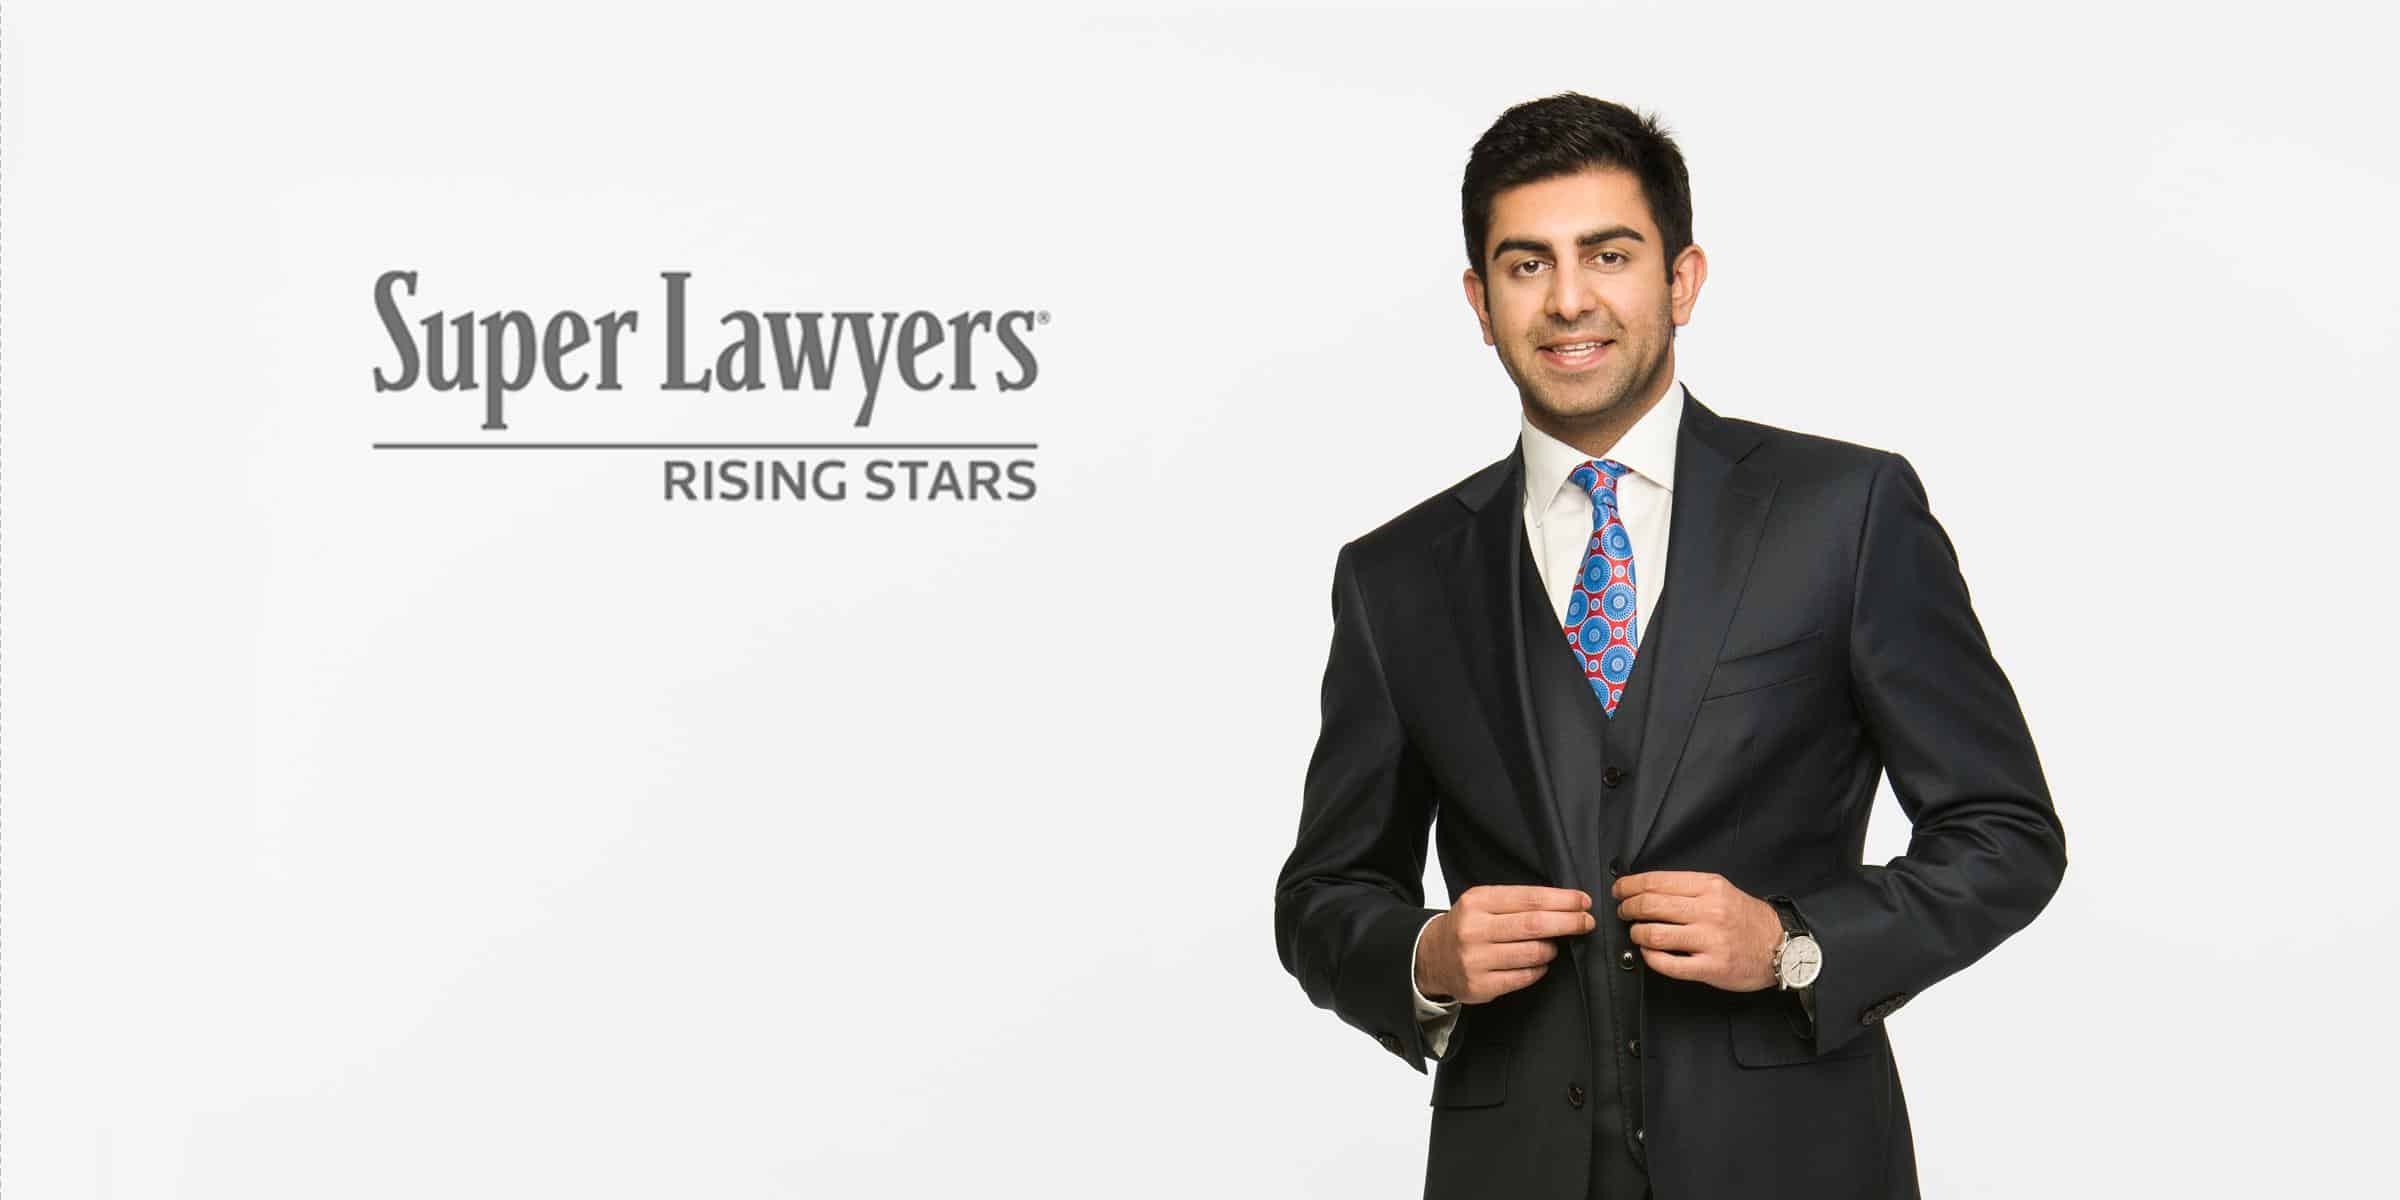 Chain | Cohn | Clark lawyer Neil Gehlawat named to 2017 Super Lawyers “Rising Stars” list